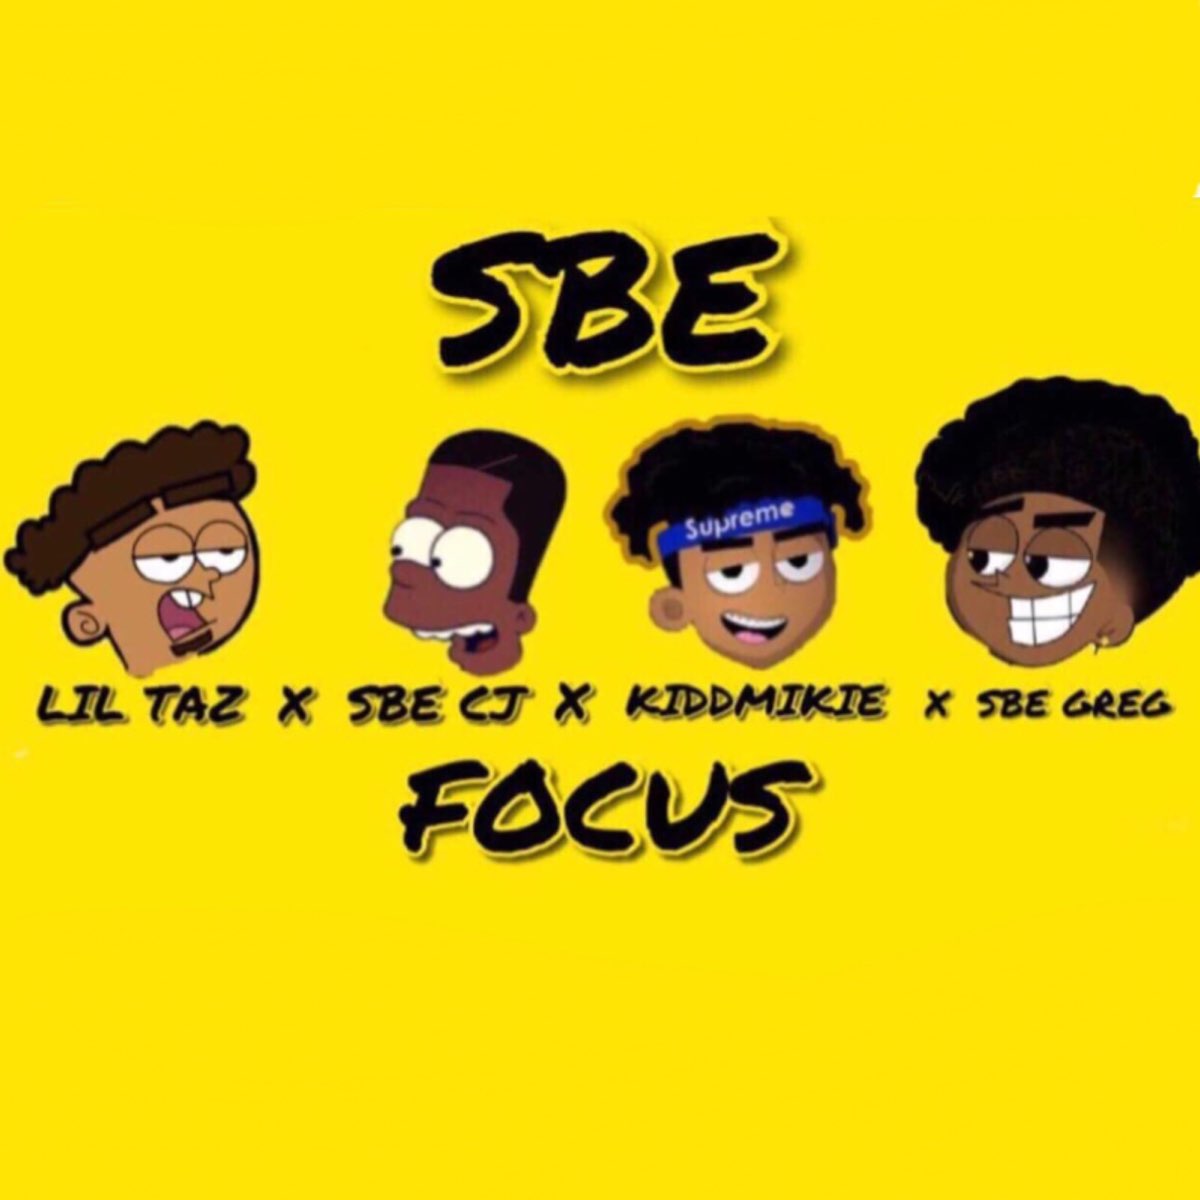 Focus (feat. Lil Taz, Kid Mikie & Sbe Greg) - Single by SBE- Cj on Apple  Music